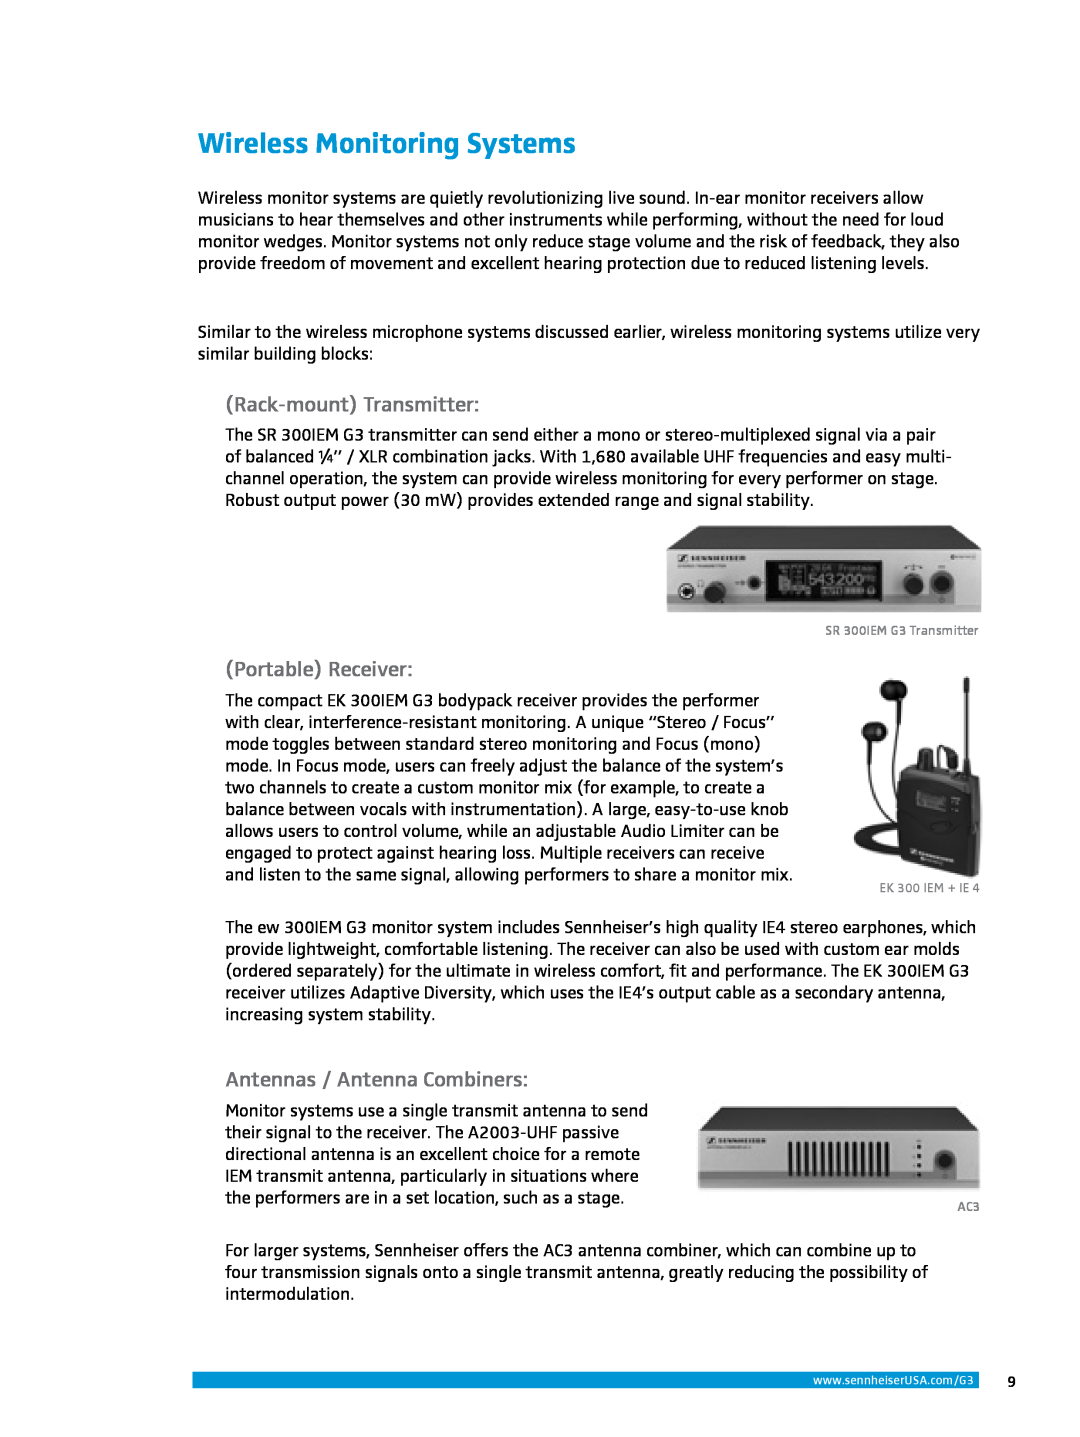 Sennheiser ew 300IEM G3 manual Wireless Monitoring Systems, Rack-mountTransmitter, Portable Receiver 